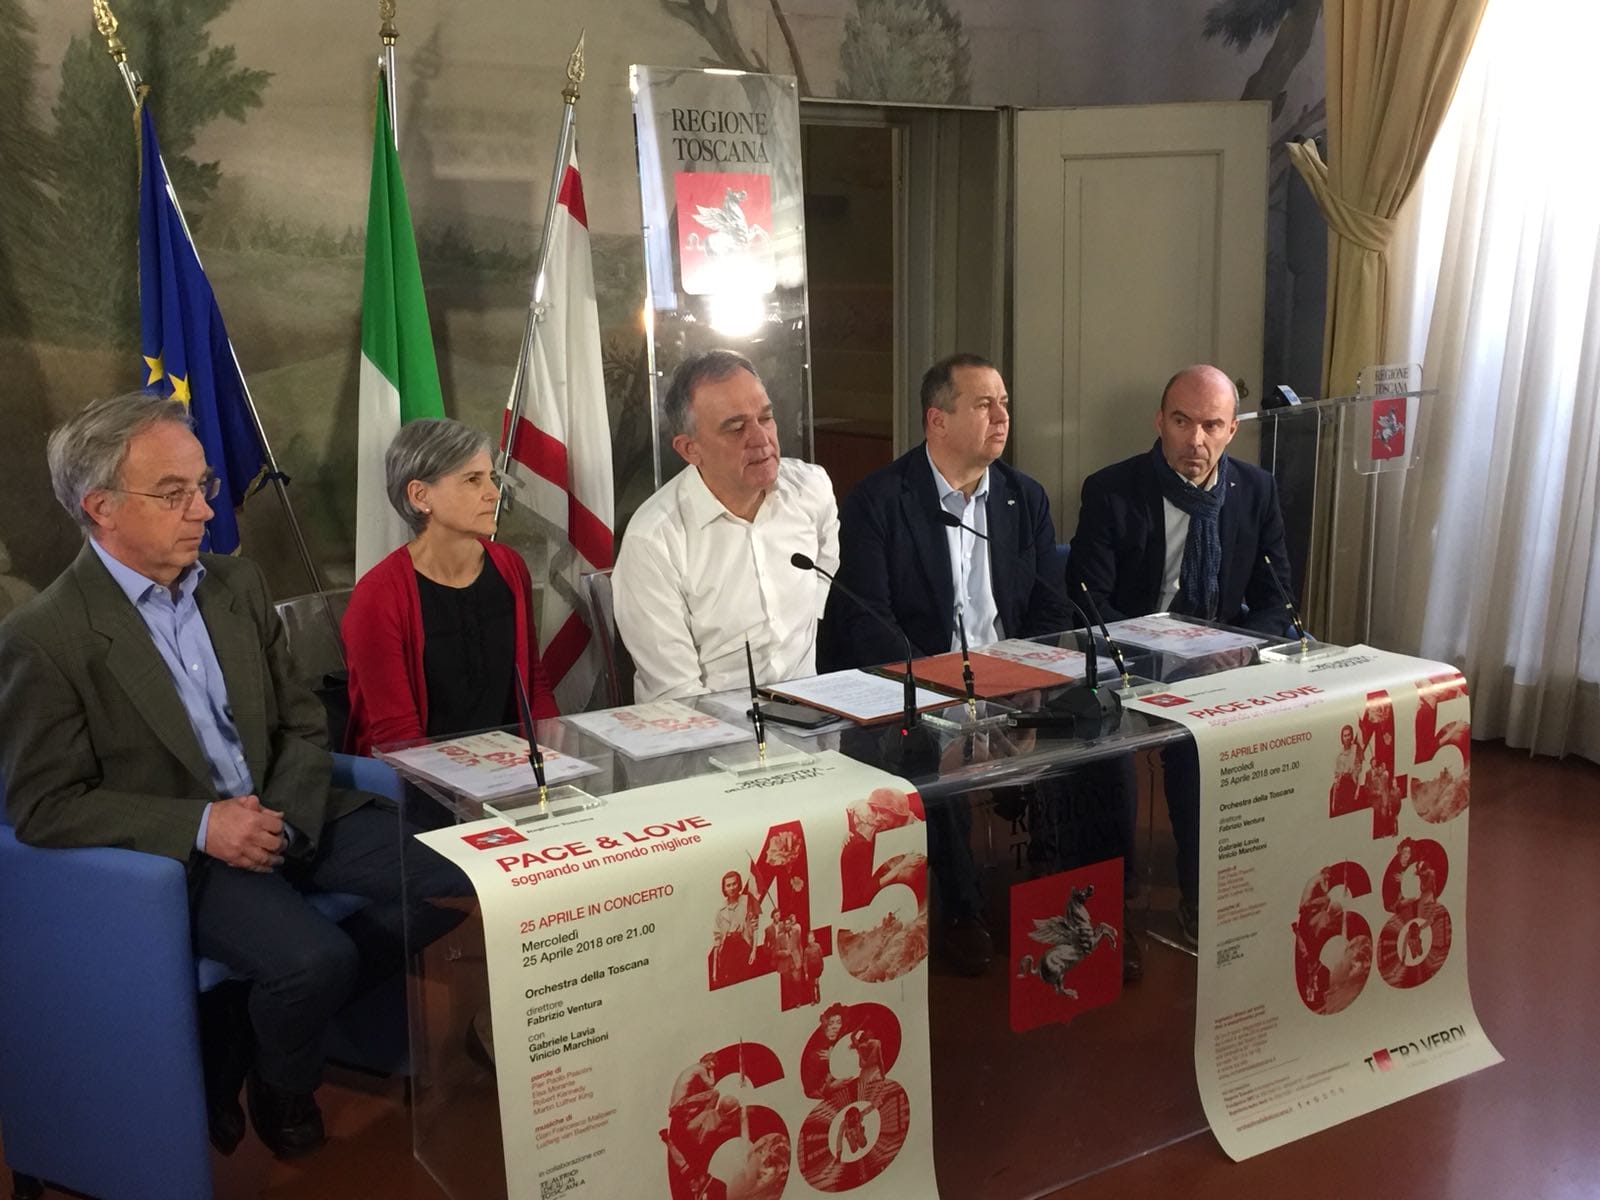 25 aprile: Toscana, una firma contro i neofascismi